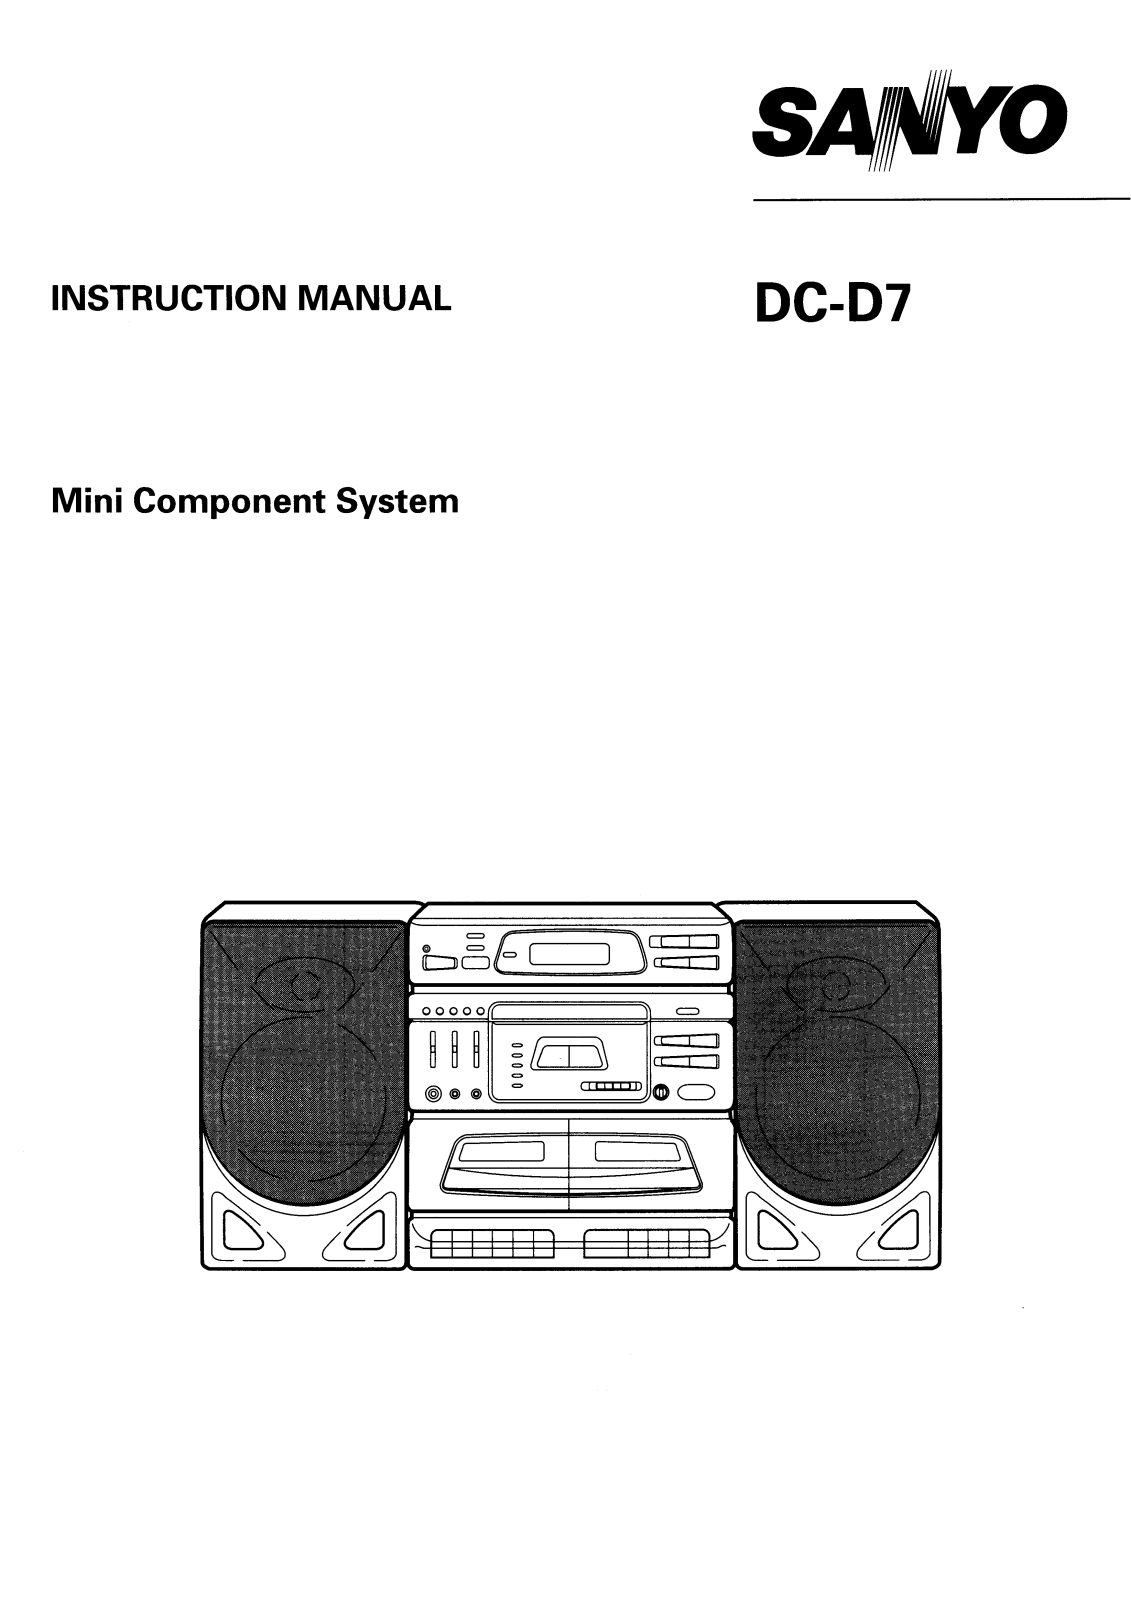 Sanyo DC-D7 Instruction Manual